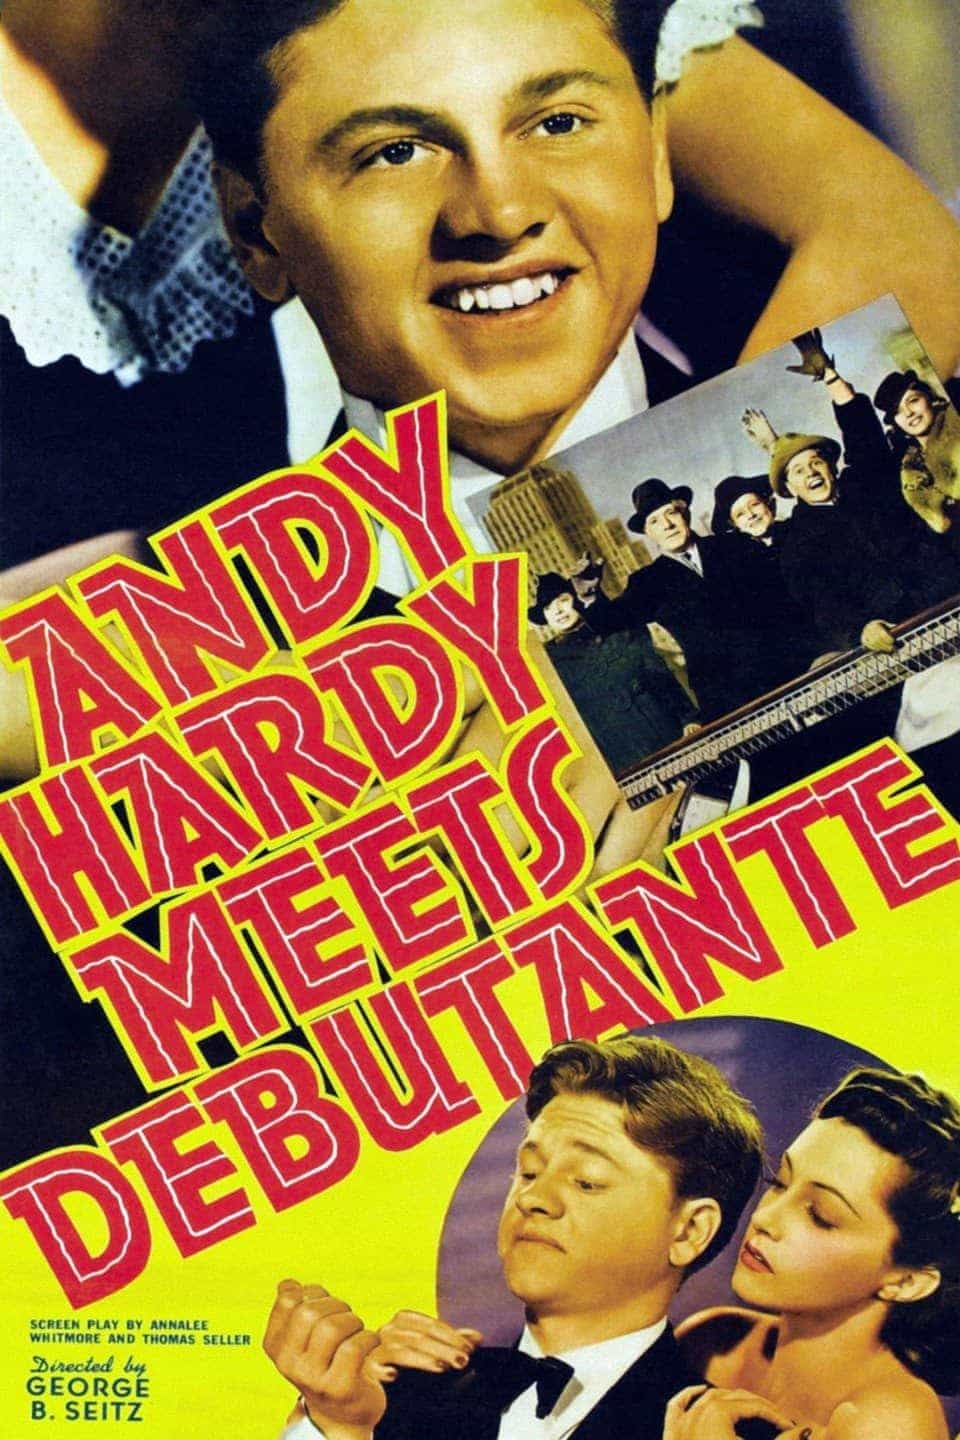 Andy Hardy Meets Debutante